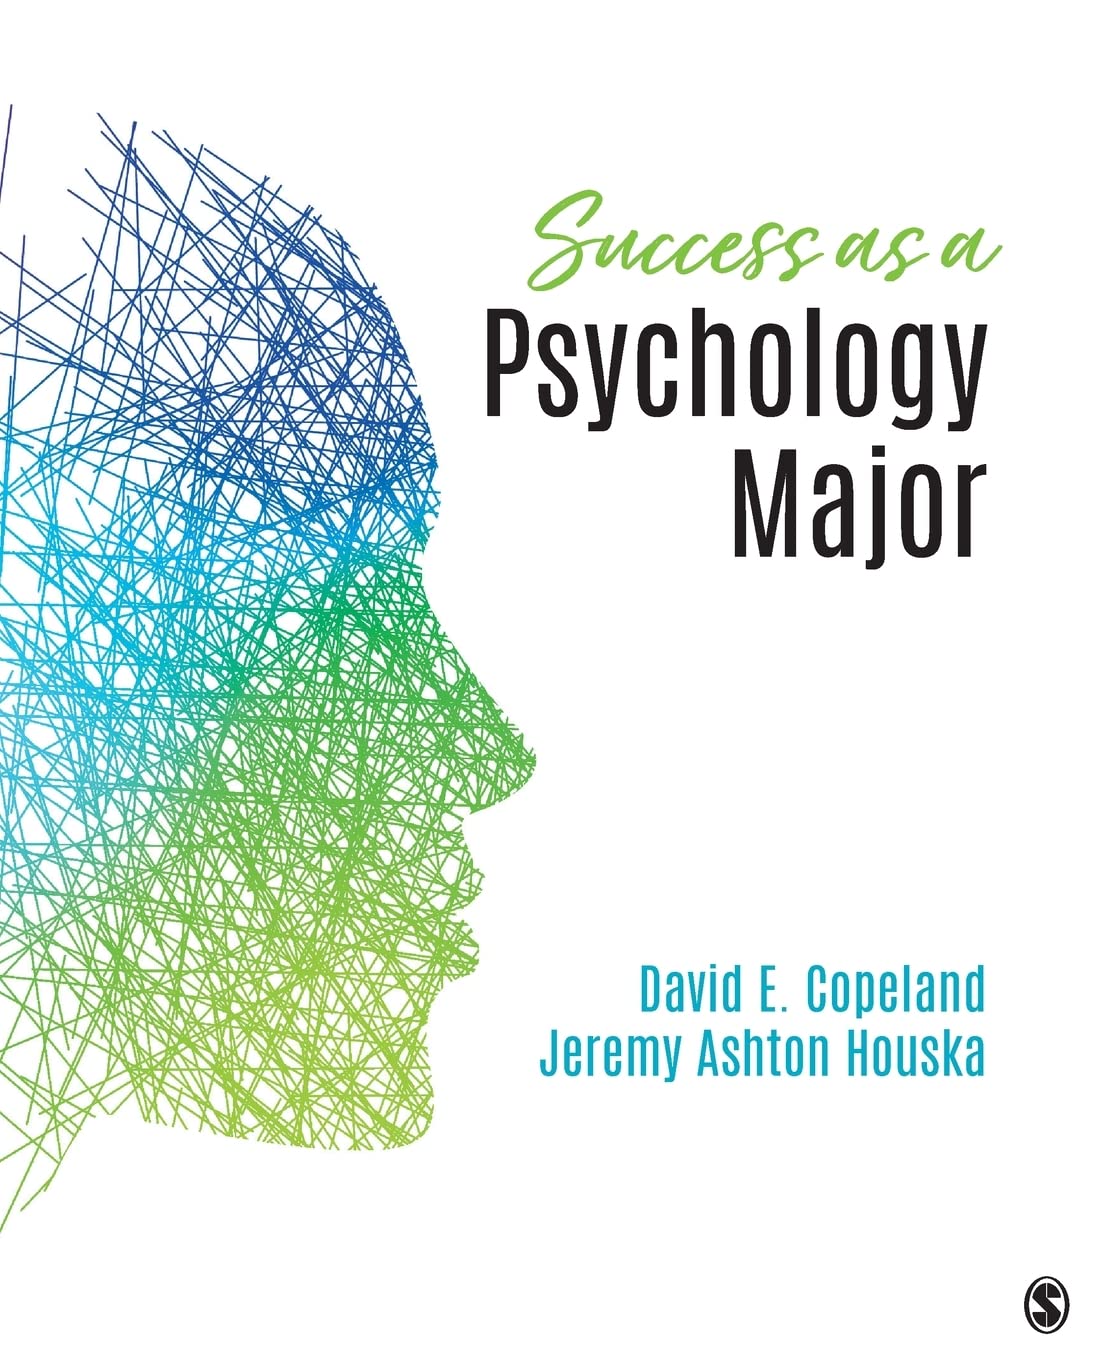 Success as a Psychology Major  by David E. Copeland